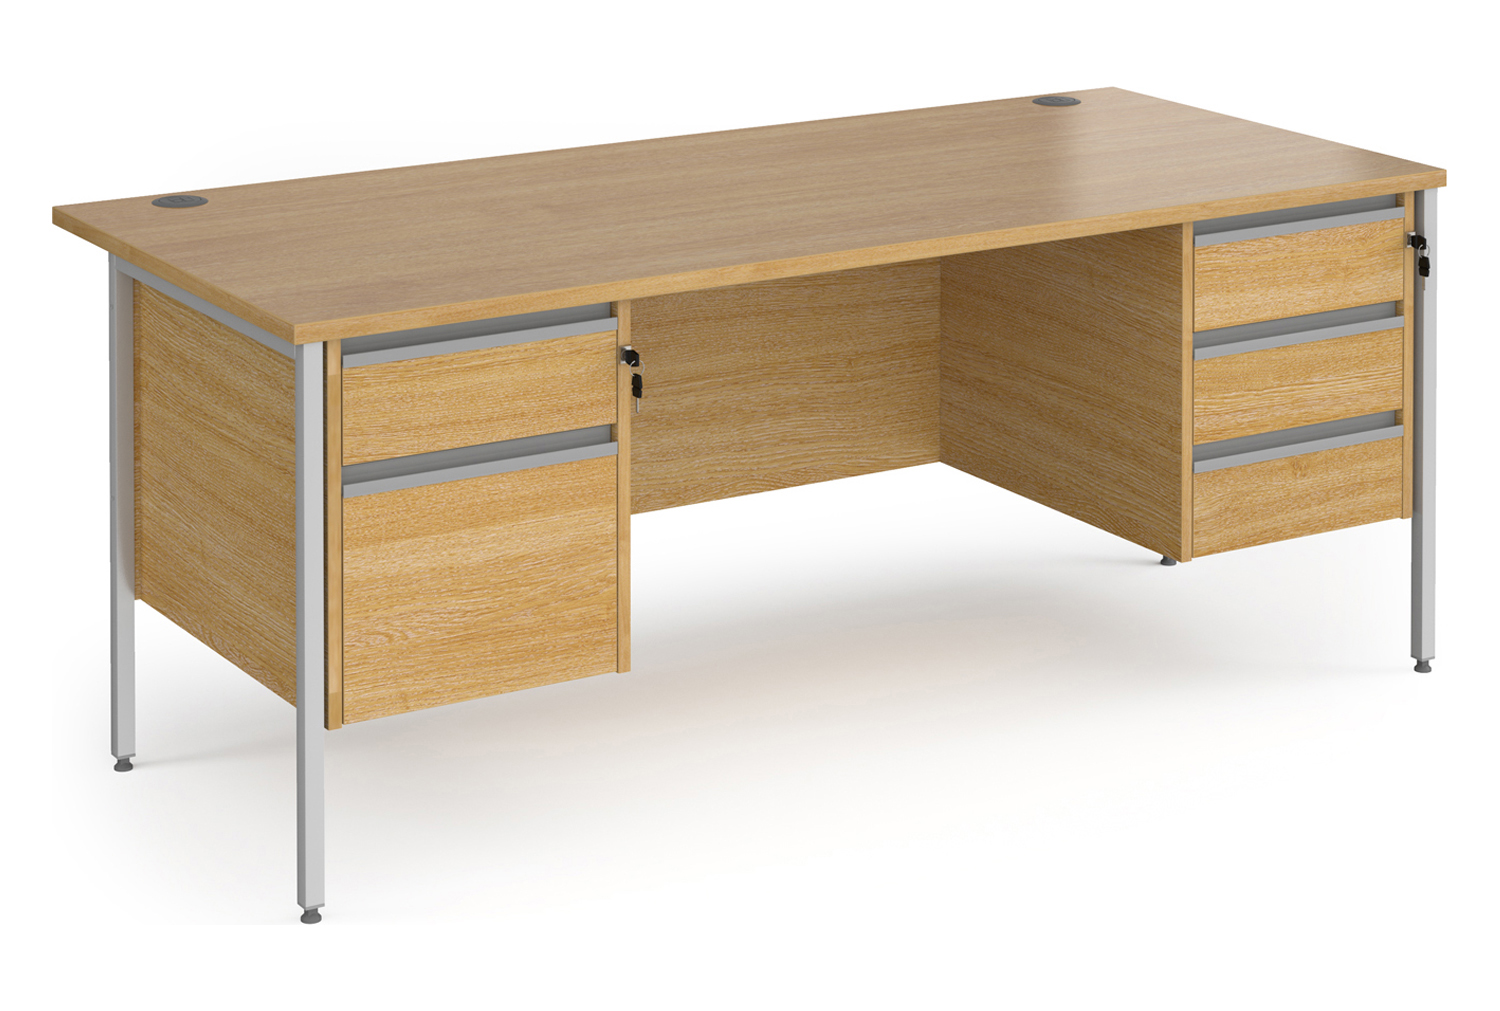 Value Line Classic+ Rectangular H-Leg Office Desk 2+3 Drawers (Silver Leg), 180wx80dx73h (cm), Oak, Express Delivery